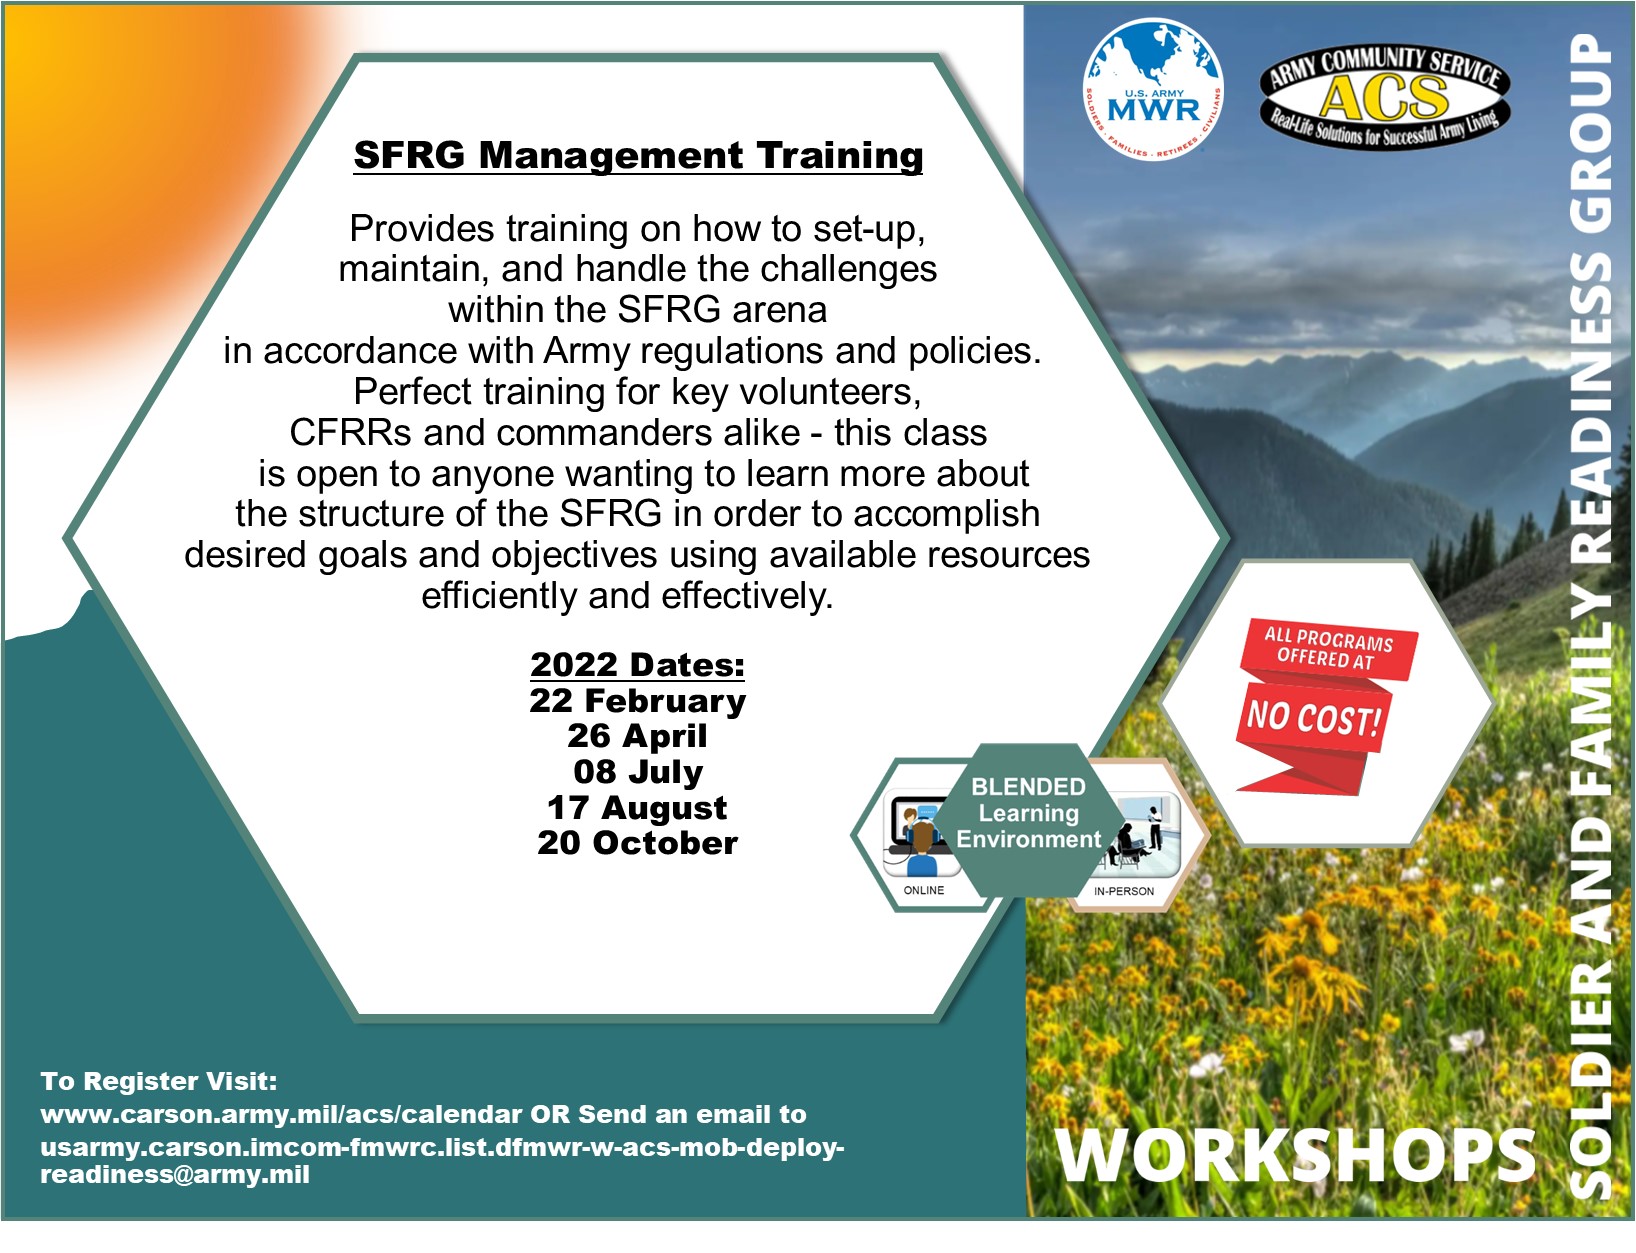 SFRG Management Training